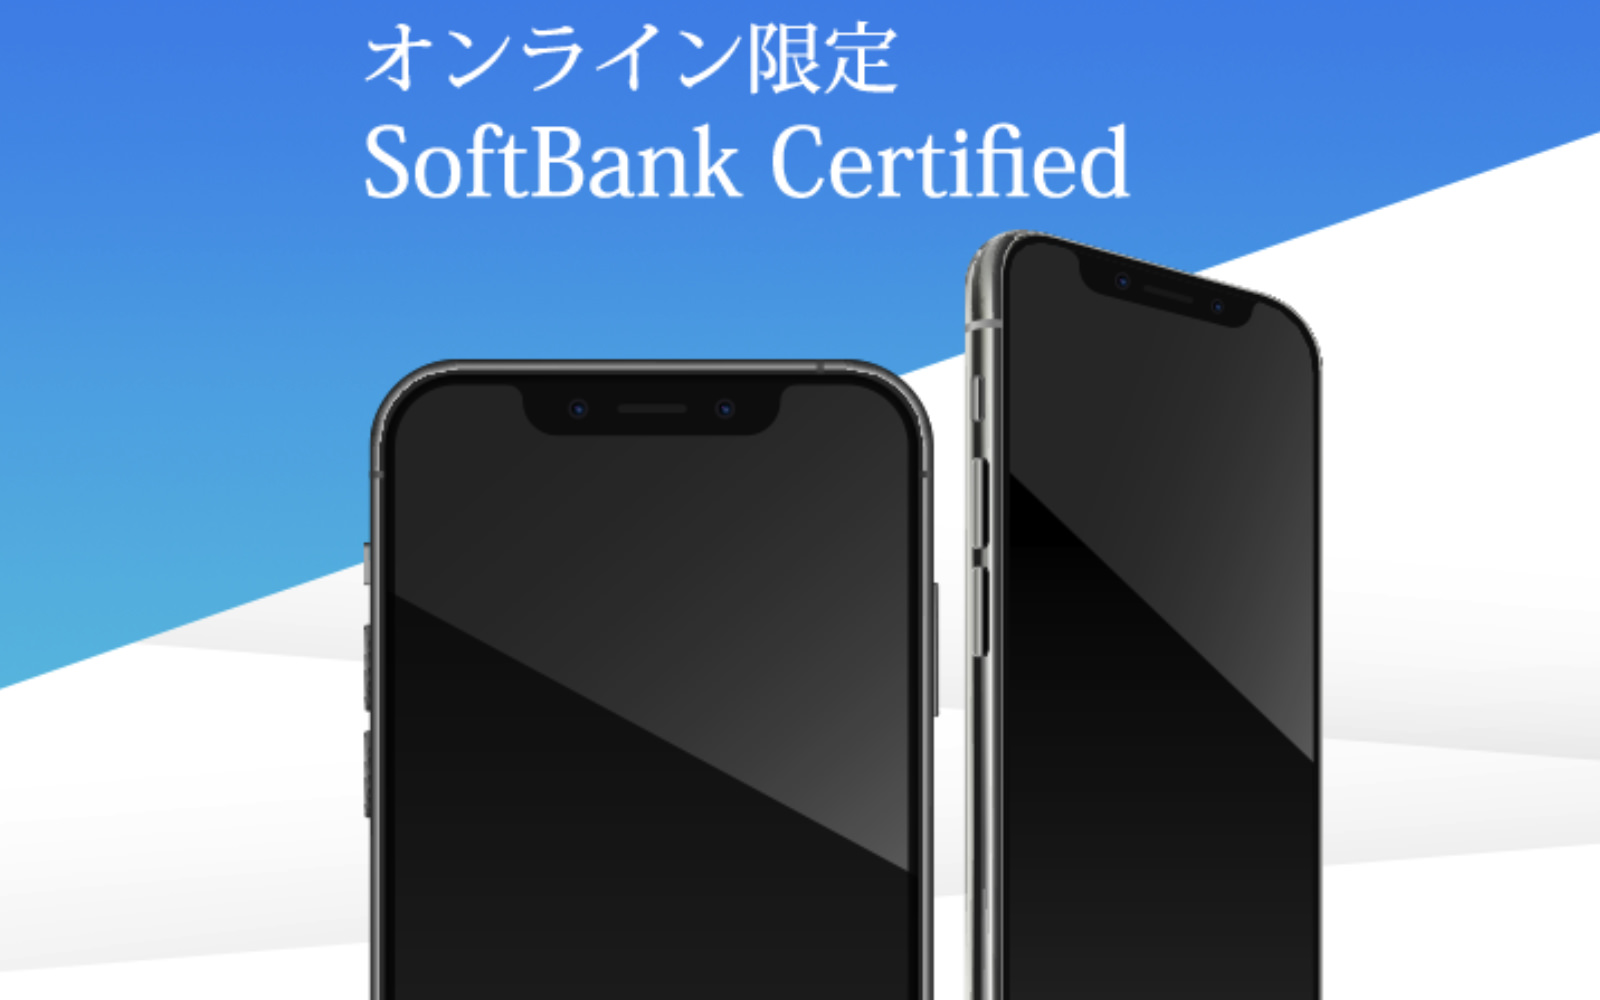 Softbank online certified referbished models